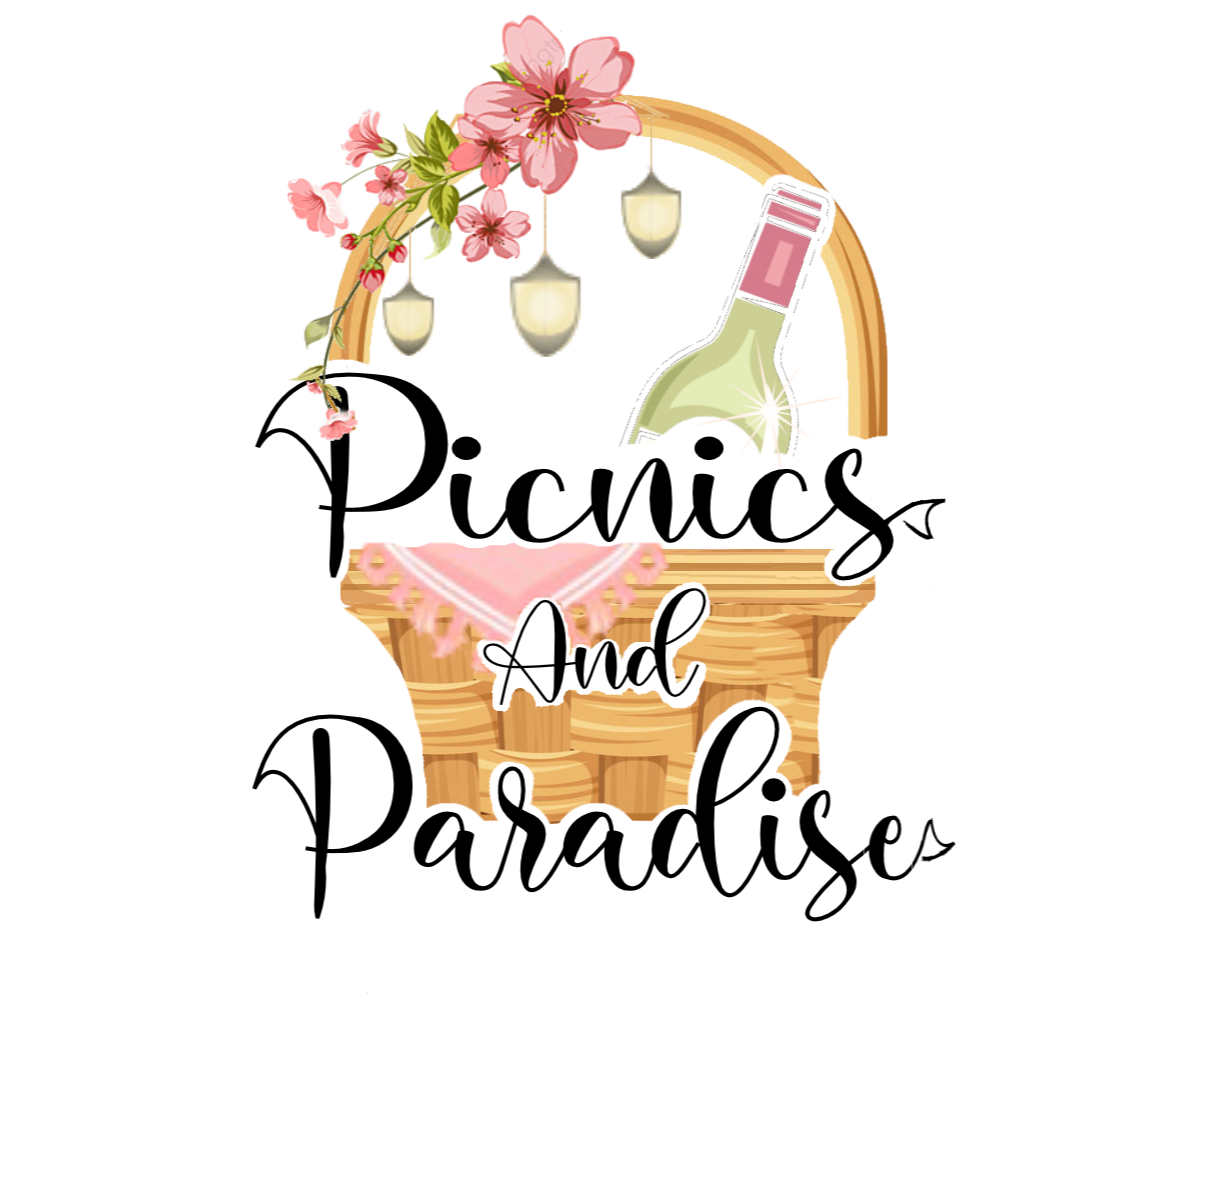 017912081182815-picnics-and-paradise-logo-final-edit-16257013317926.png